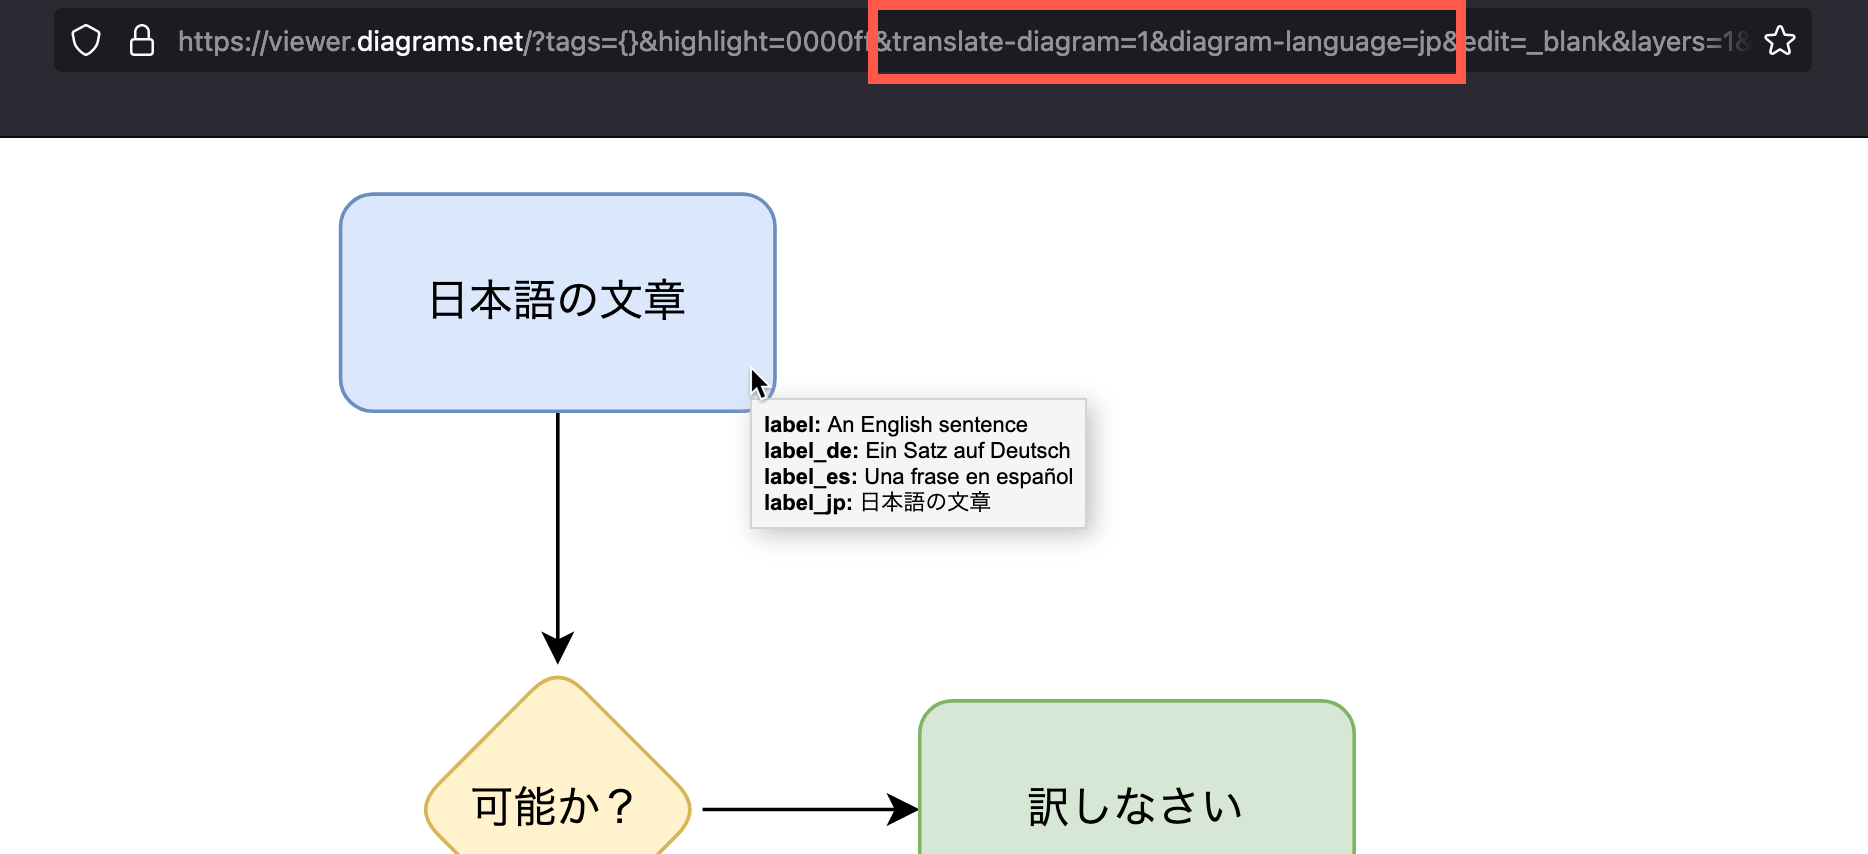 Blog Translate diagrams in the editor